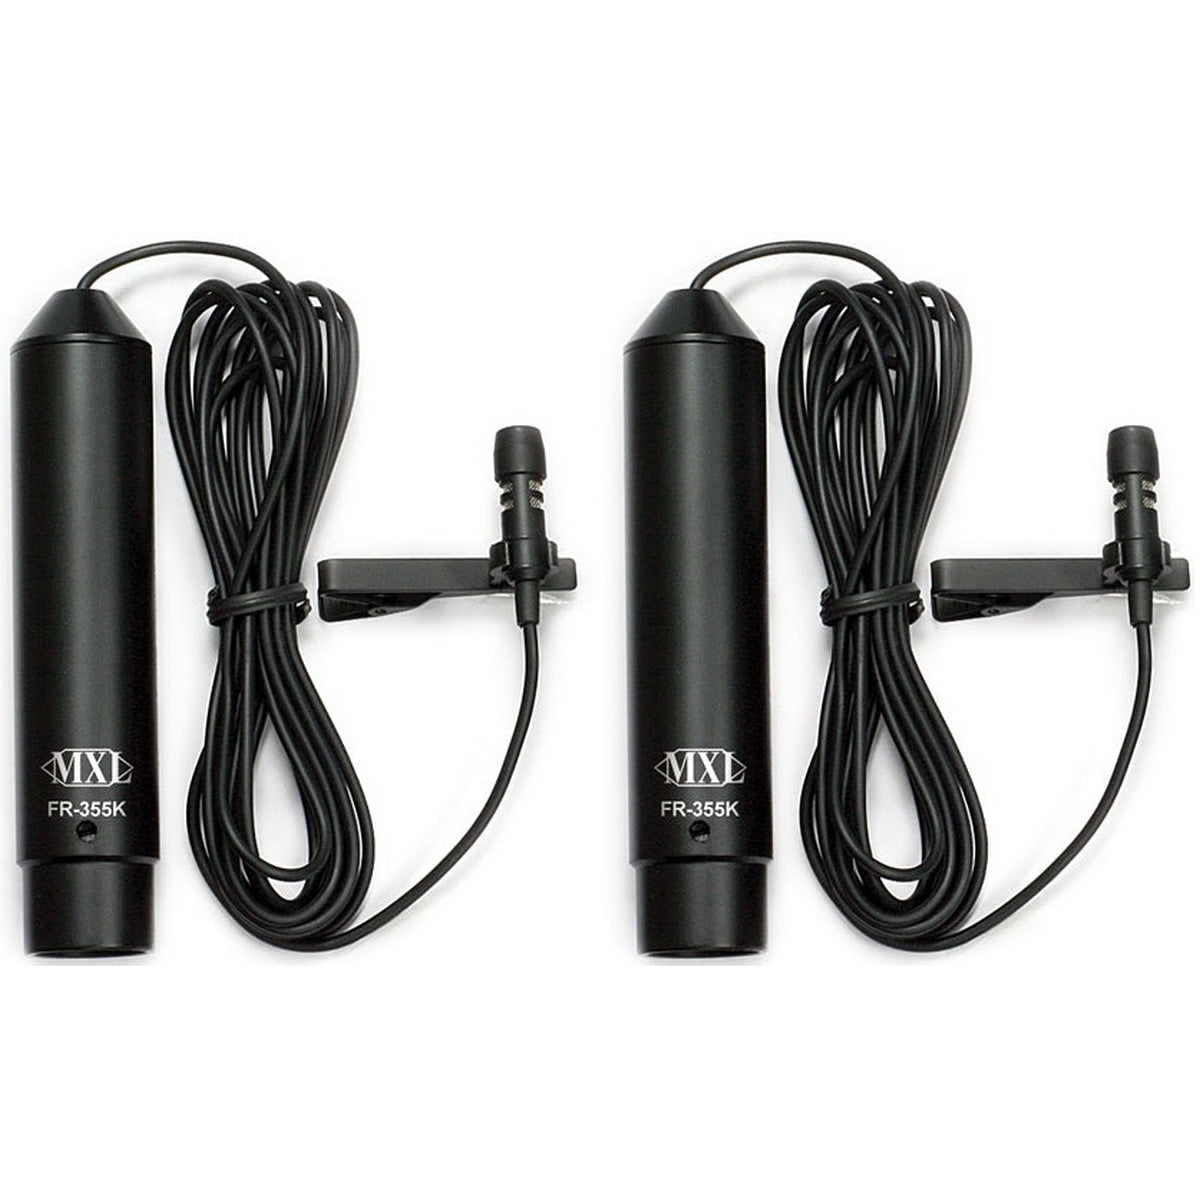 MXL FR-355K | Interview Kit includes FR-351 Cardioid FR-350 Omni Lavalier Microphones